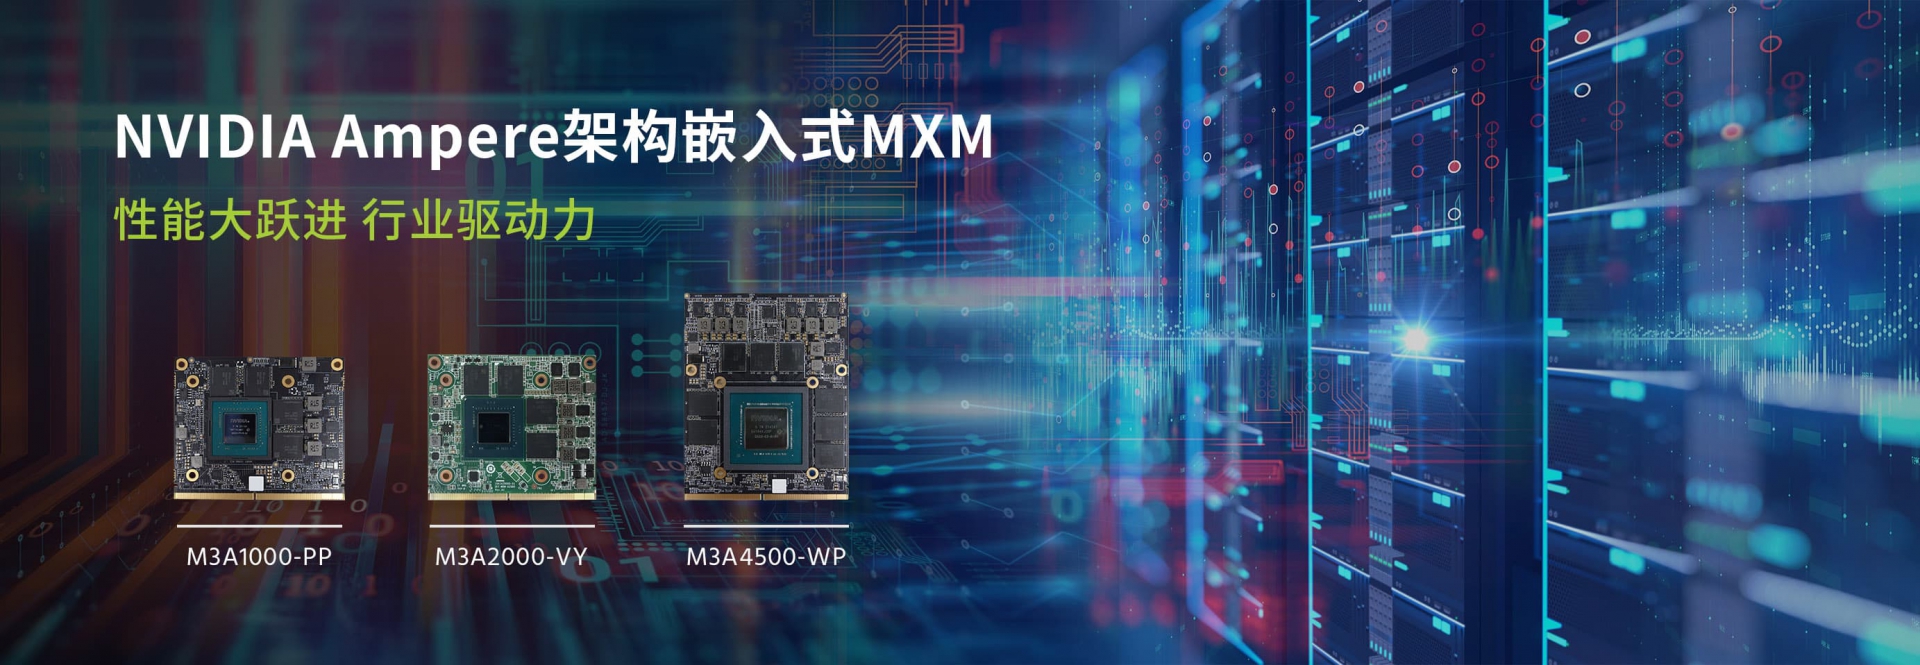 NVIDIA Ampere架构嵌入式MXM